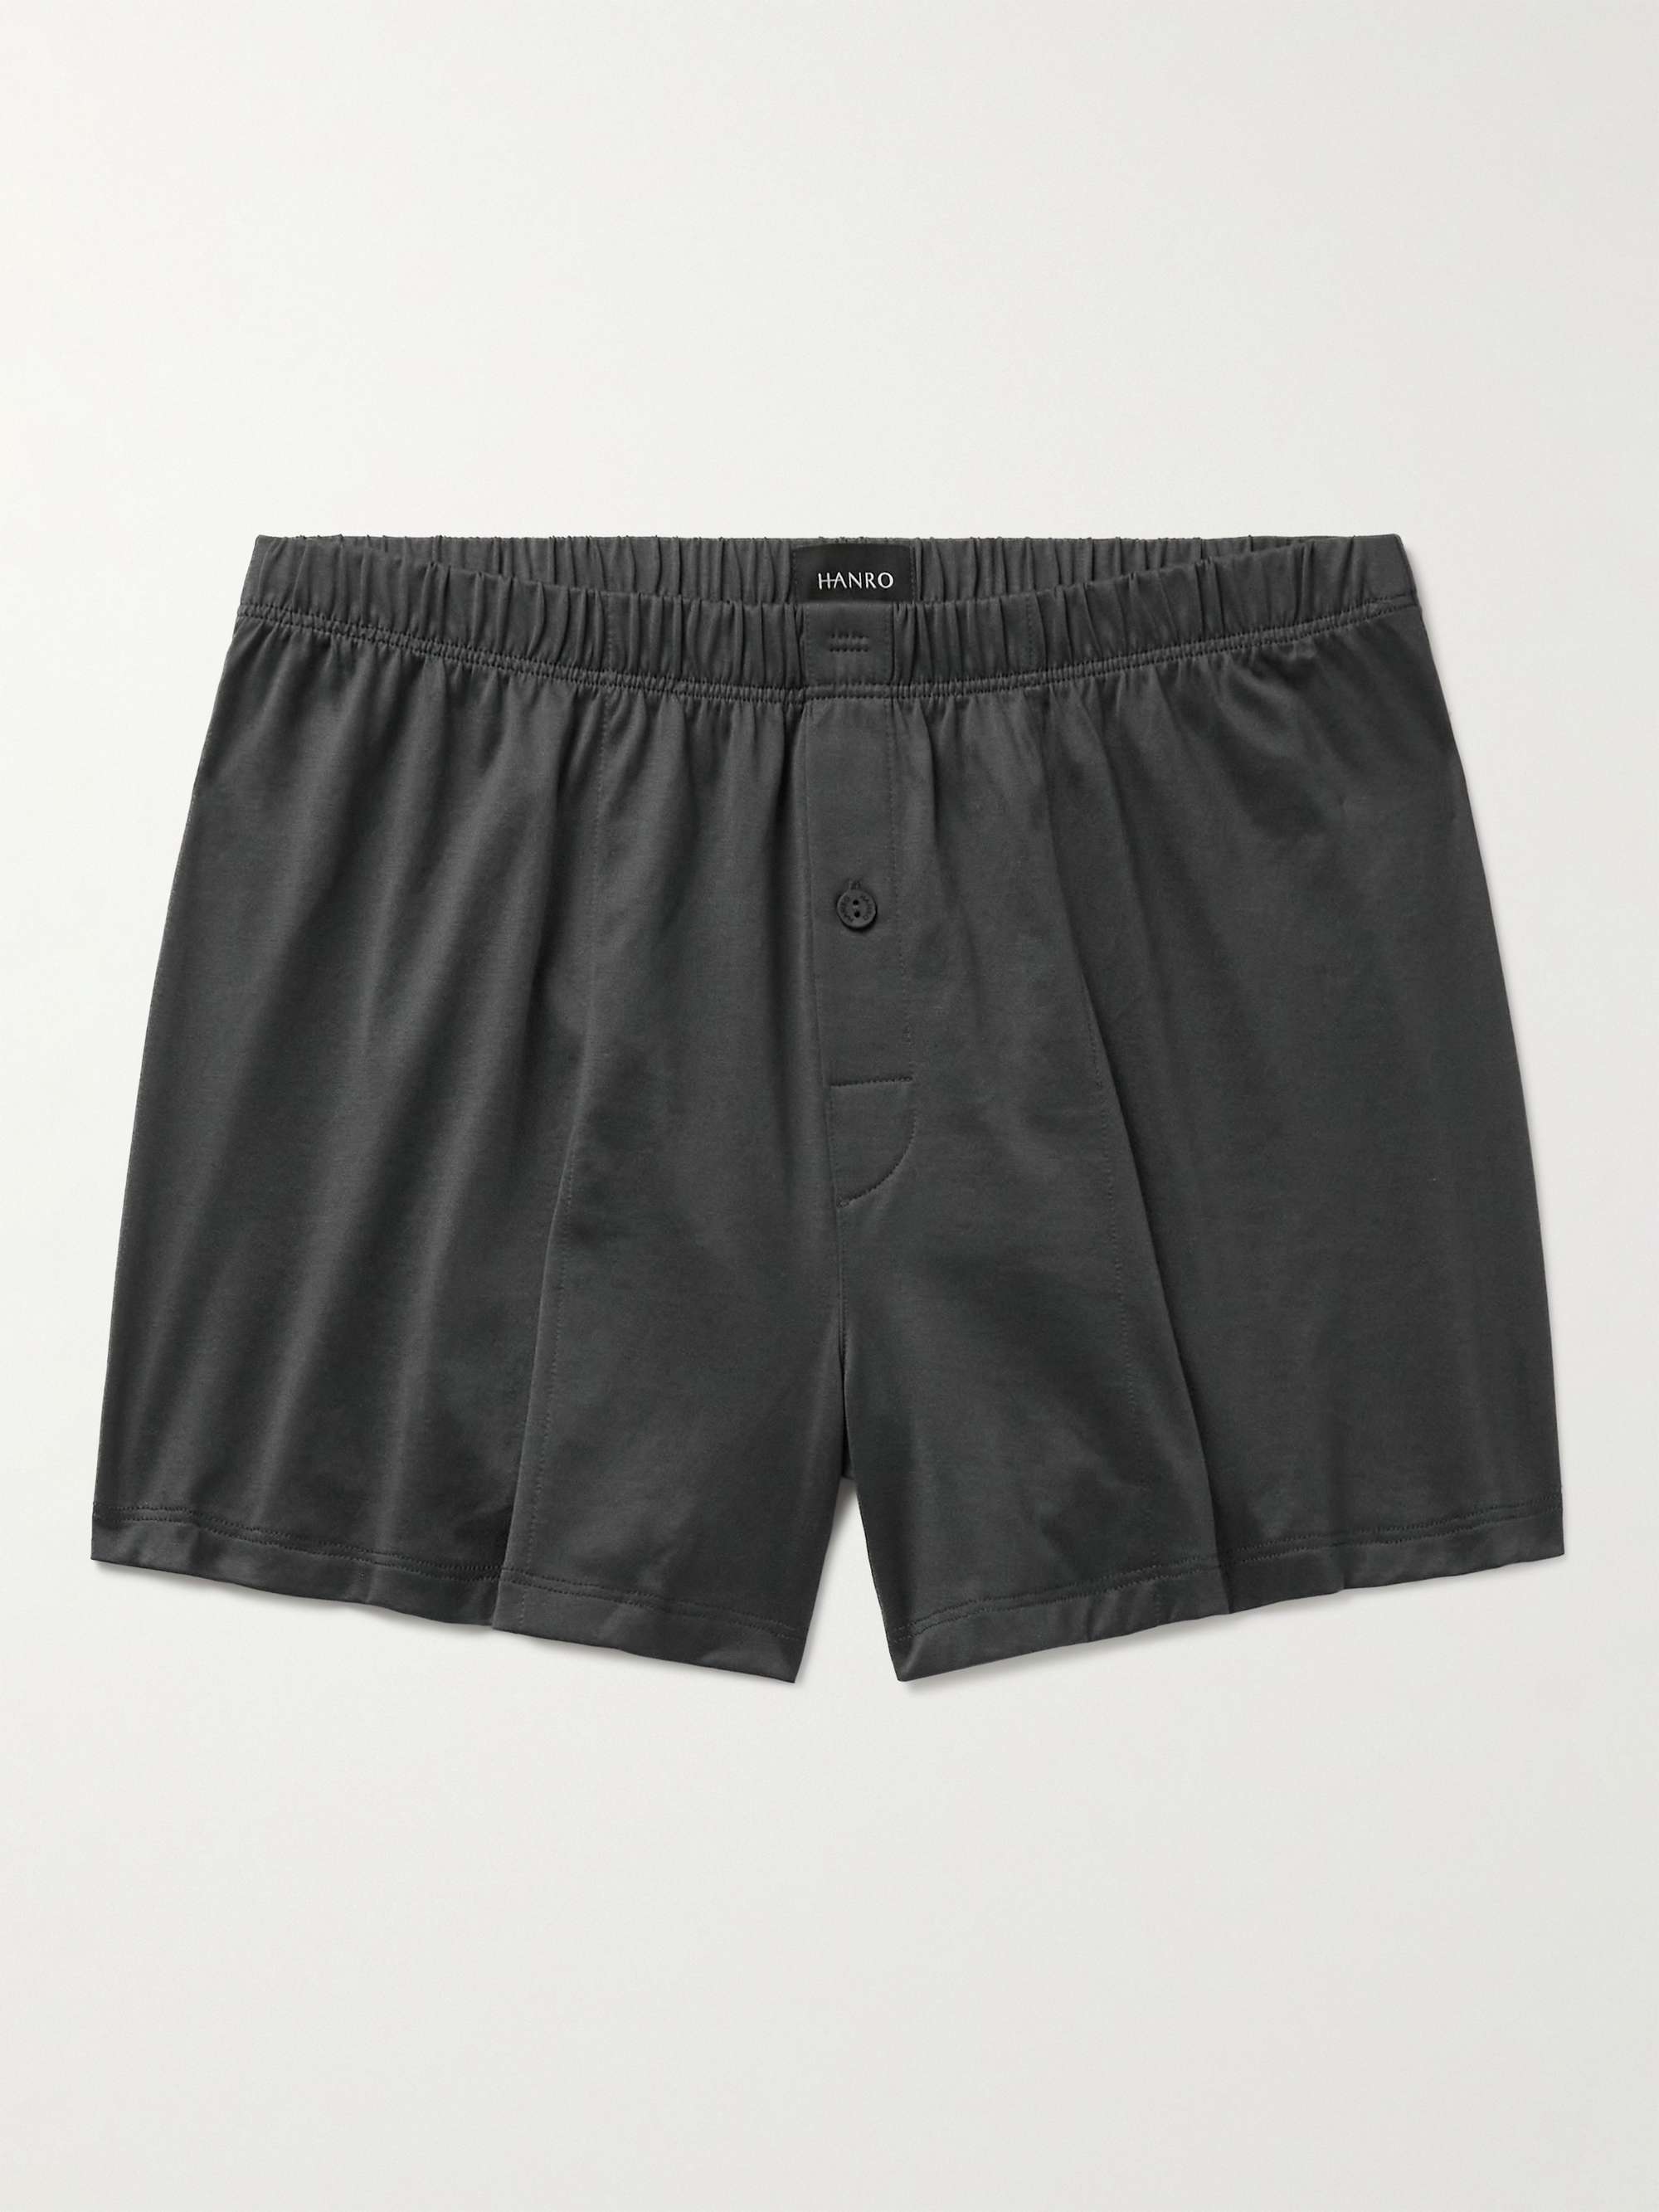 RUBINACCI Silk-Satin Boxer Shorts for Men